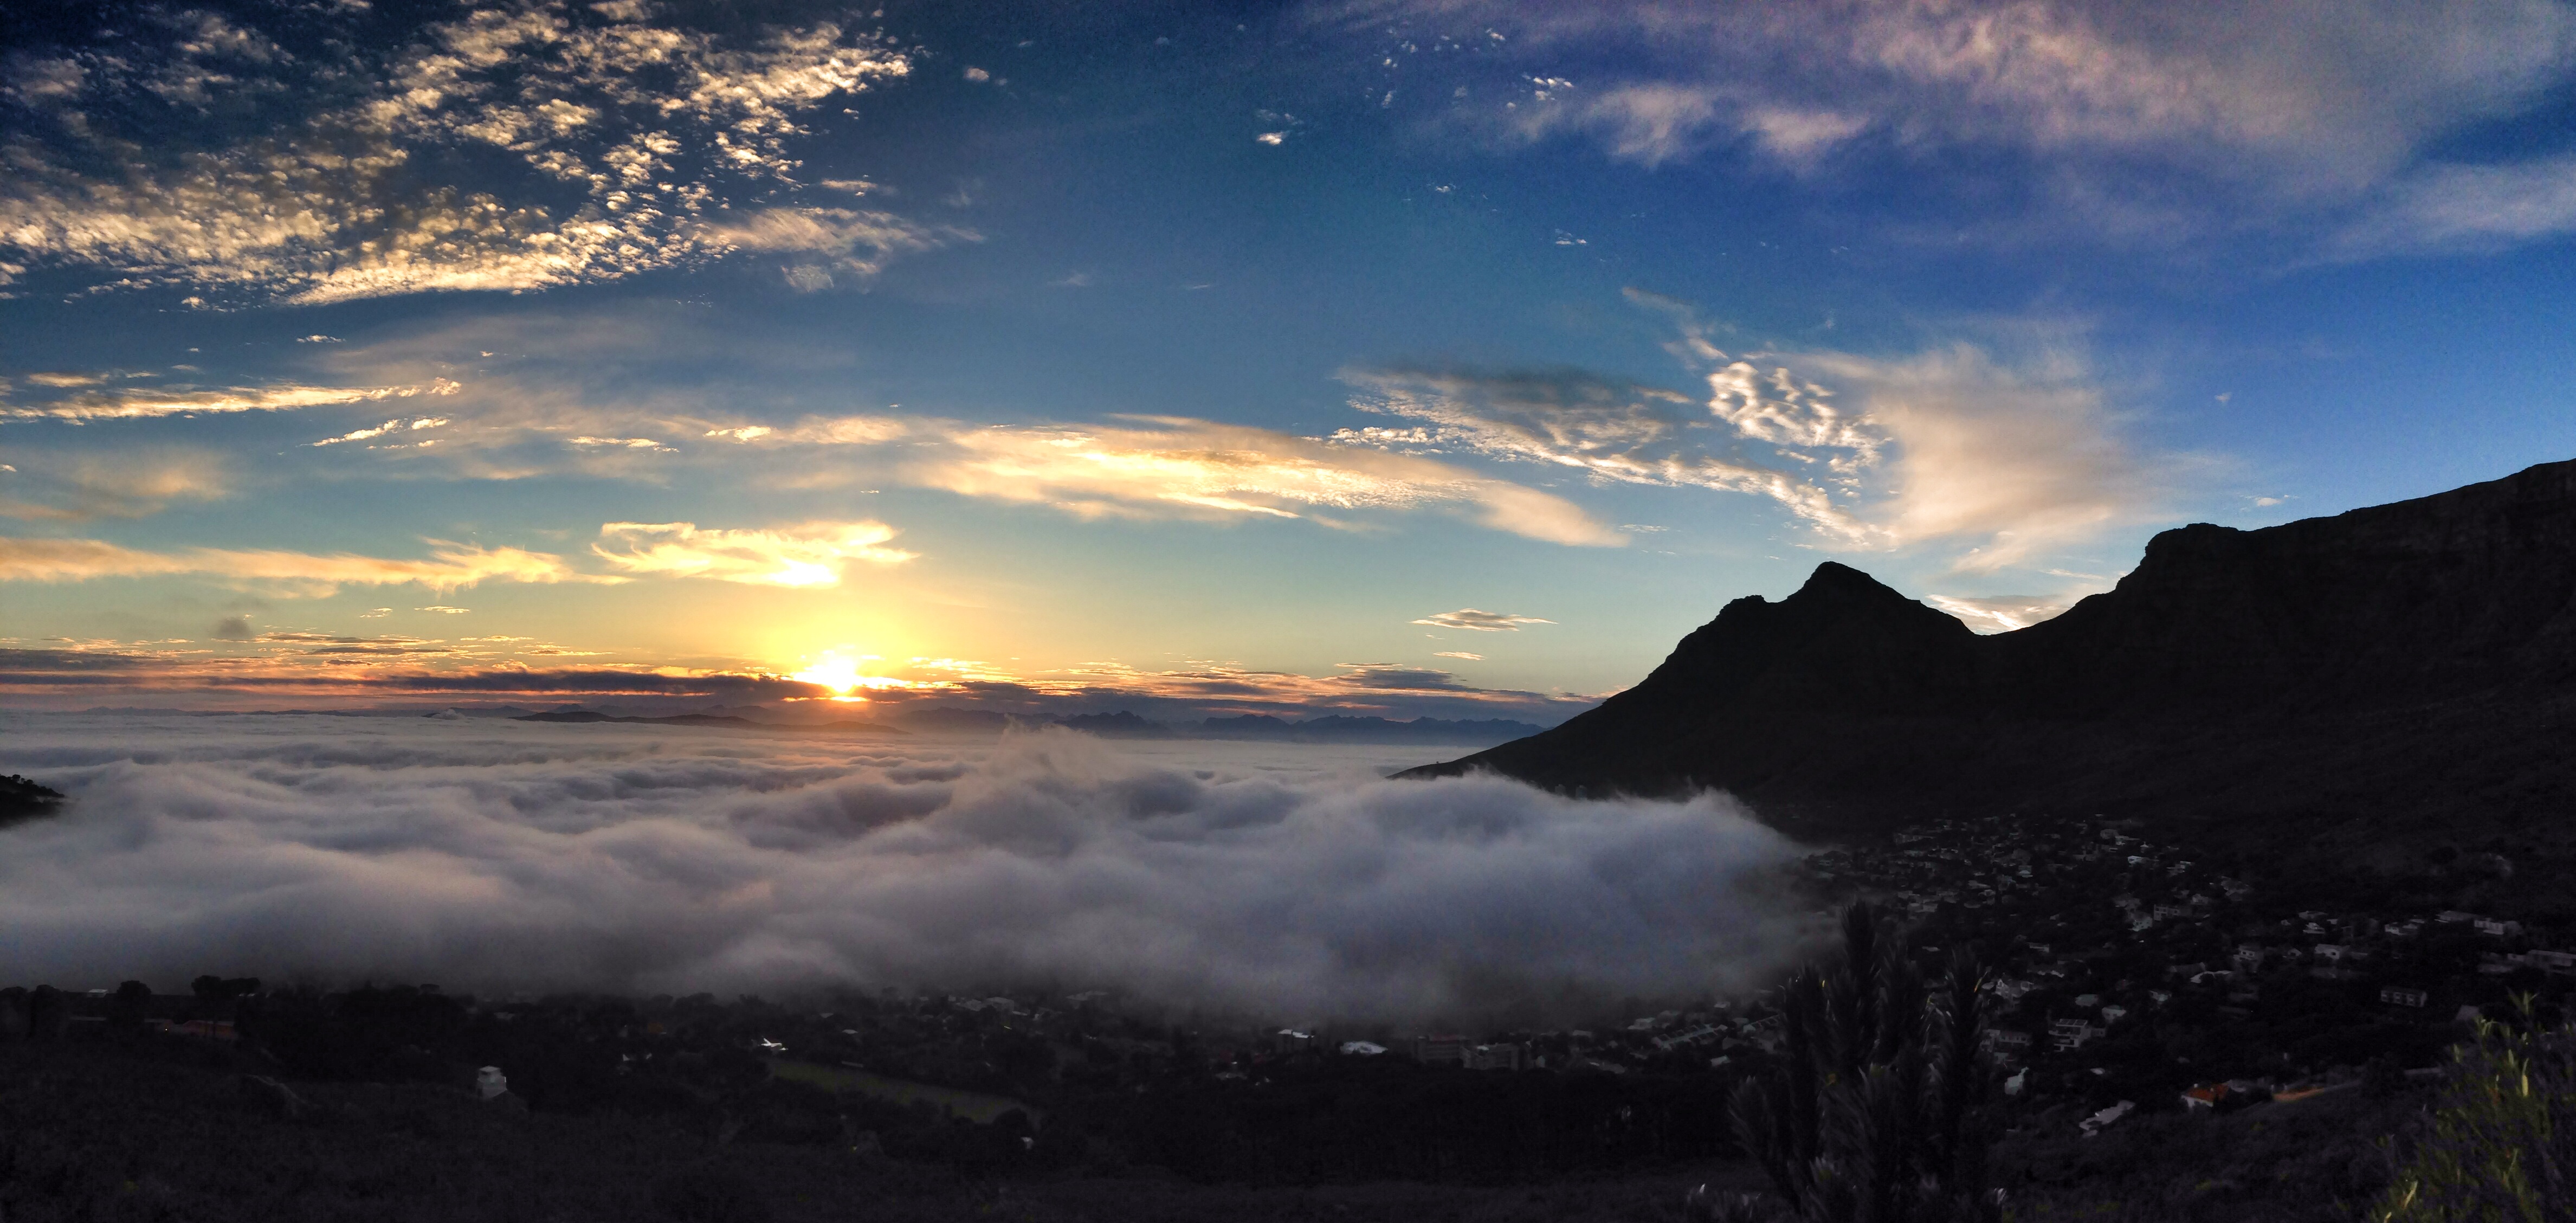 Table Mountain from Lion's Head dusk 2014